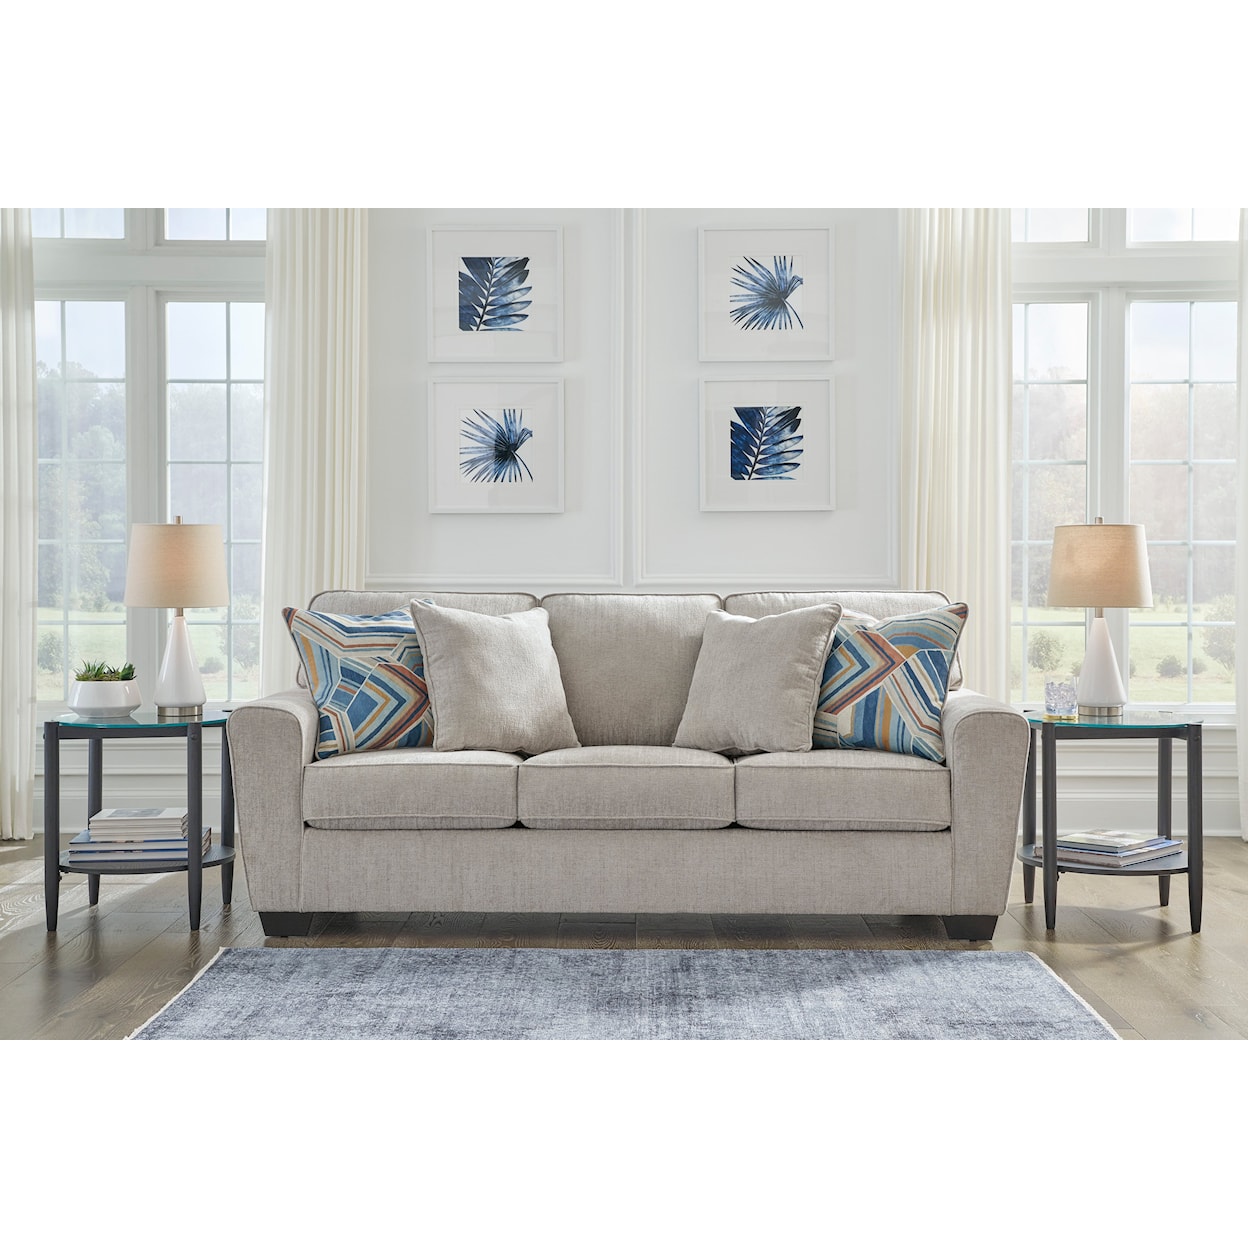 Ashley Furniture Cashton Sofa